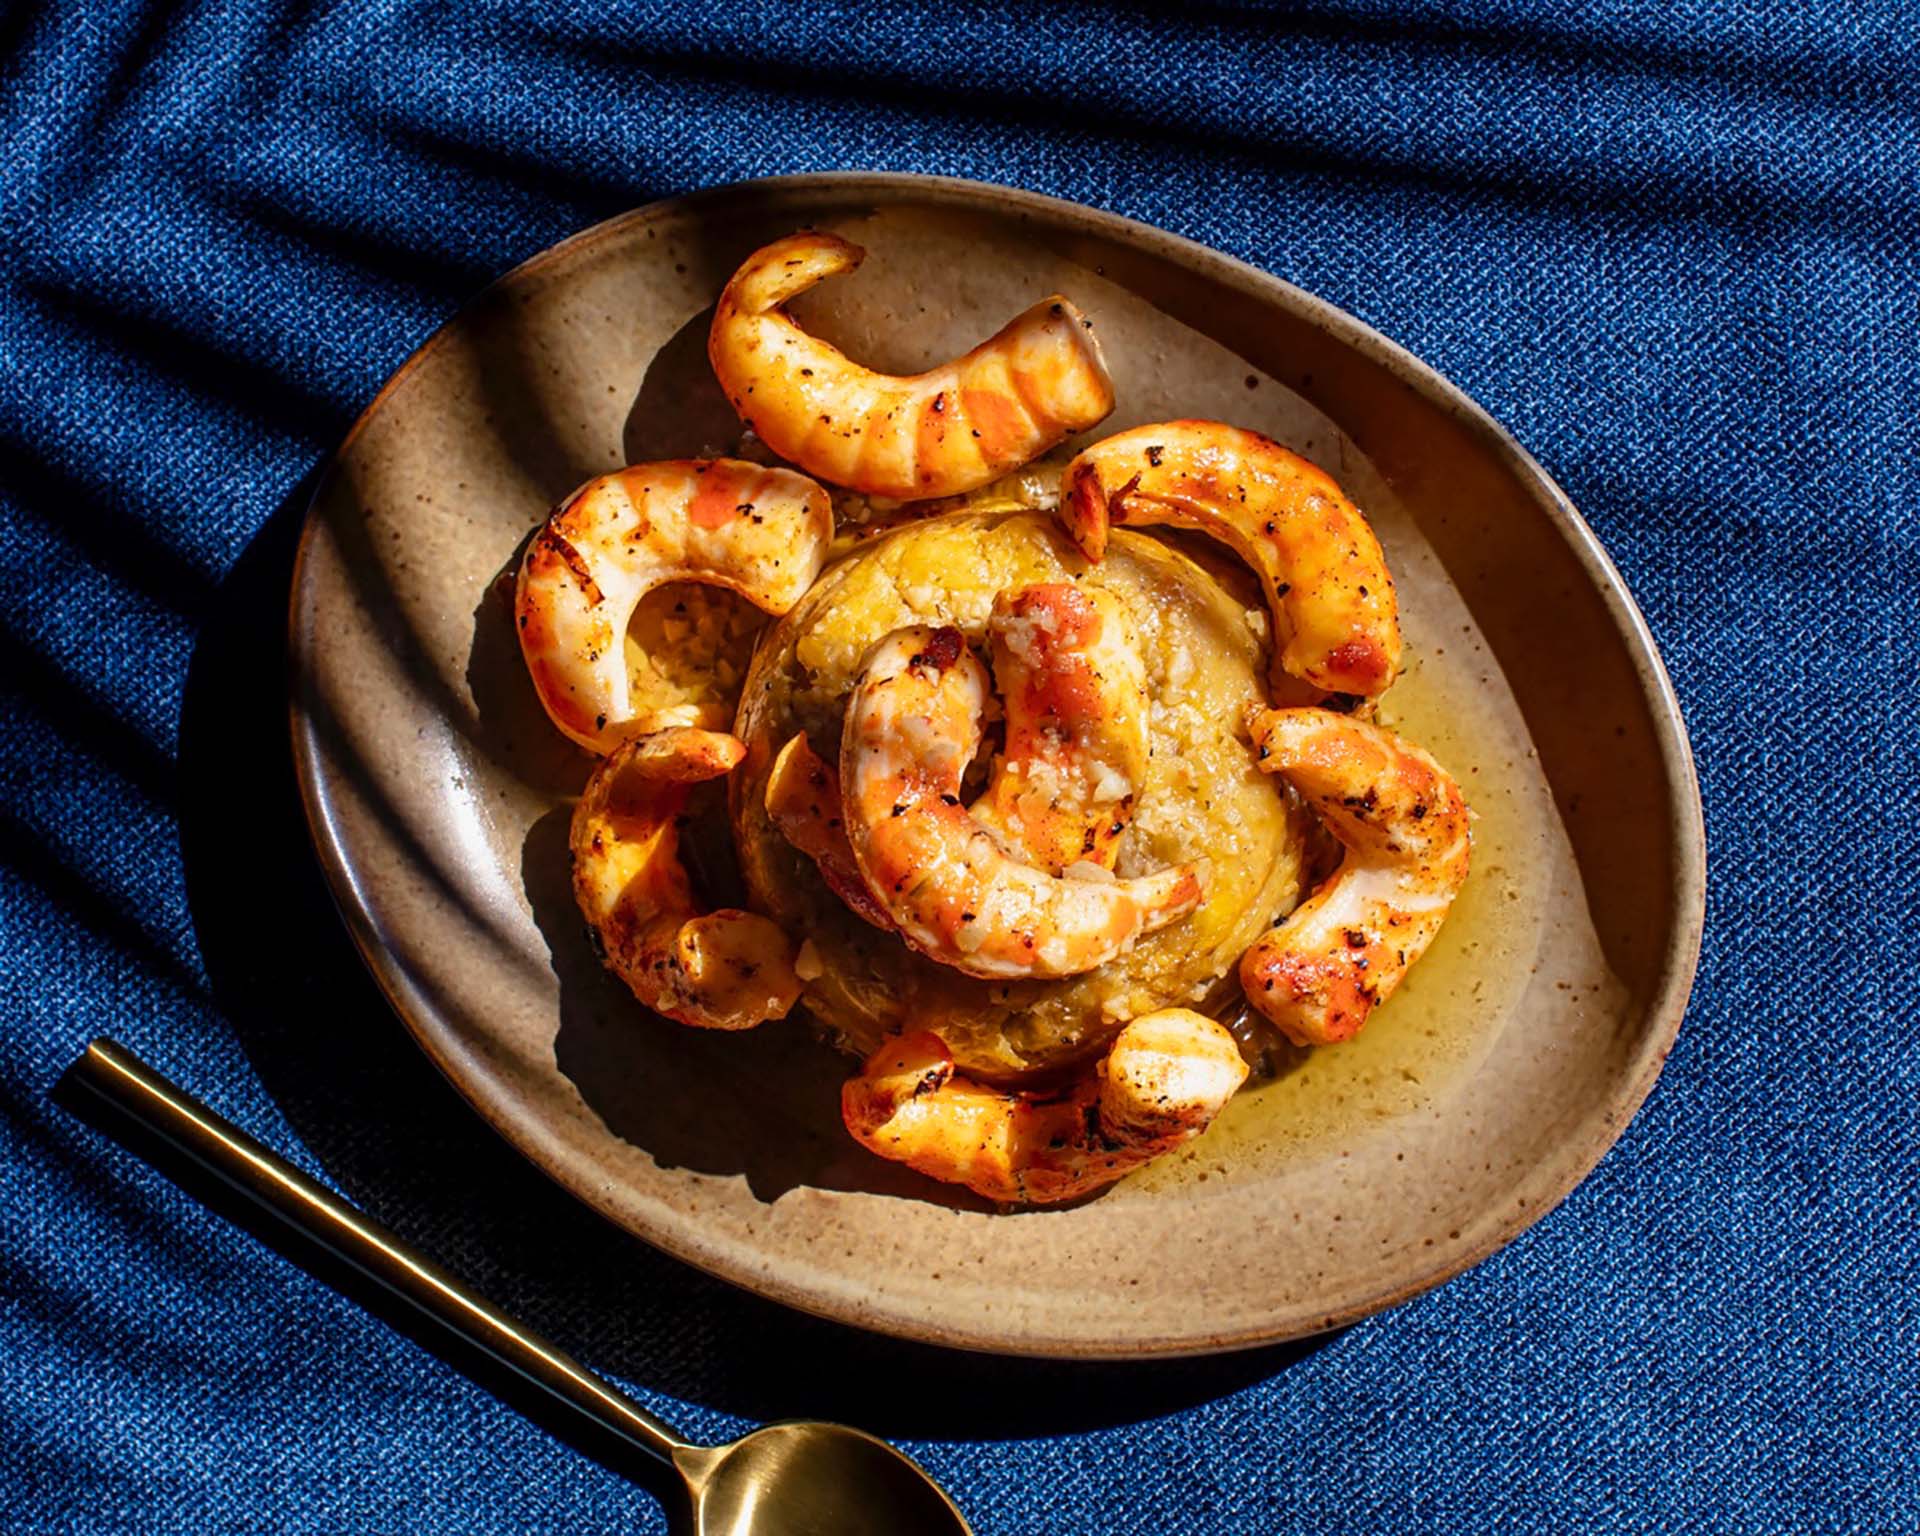 A plate of shrimp mofongo against a dark blue backdrop.